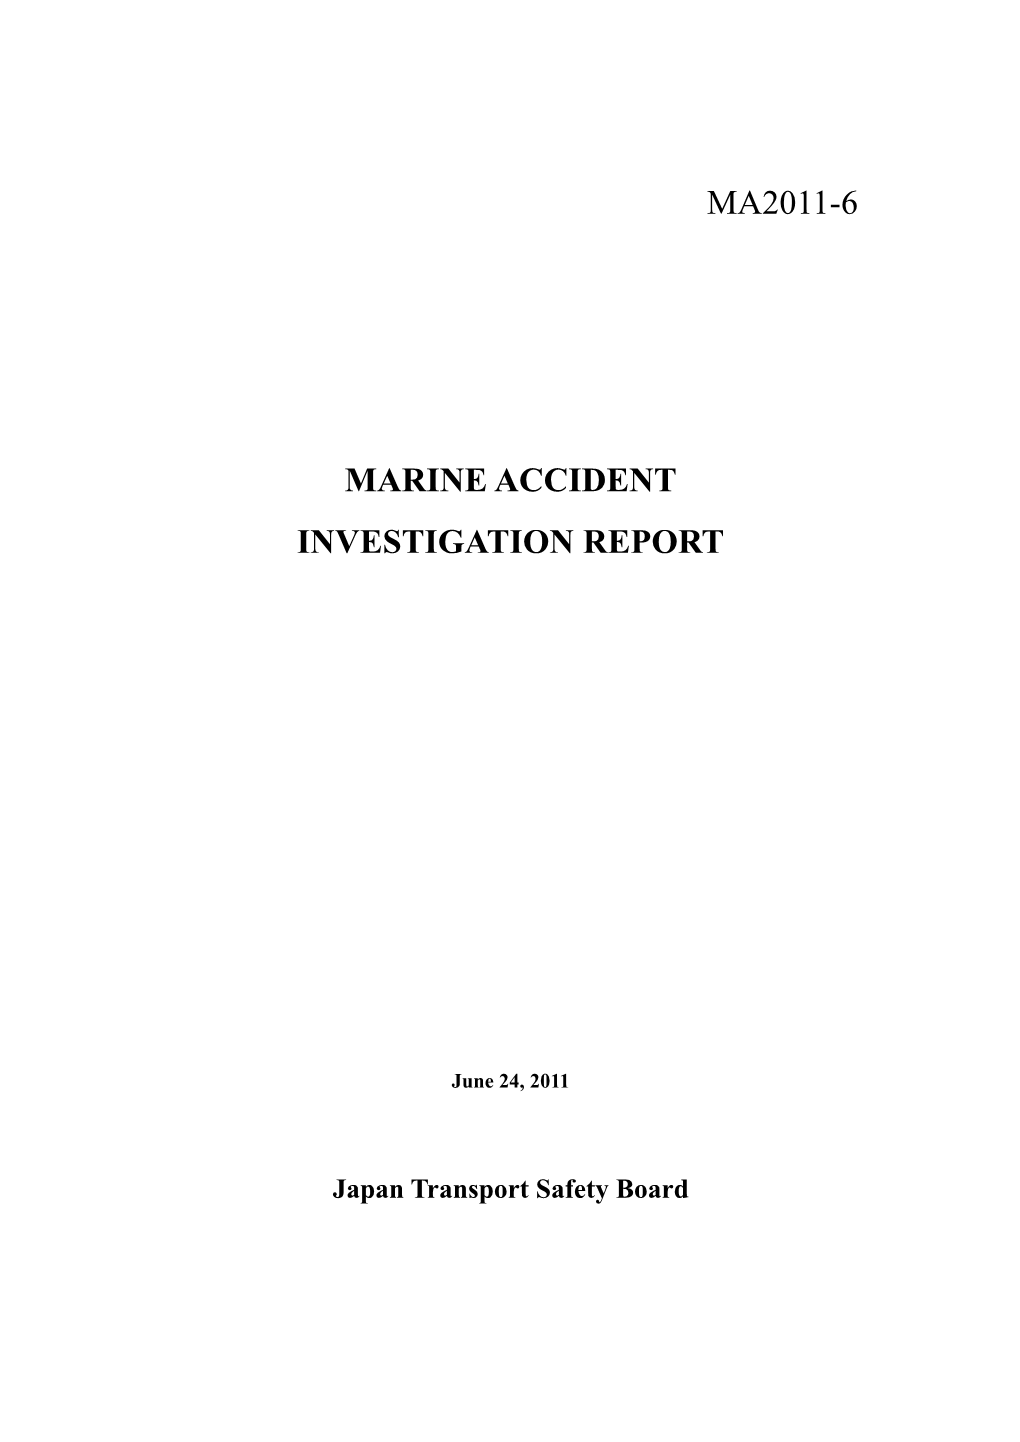 Ma2011-6 Marine Accident Investigation Report